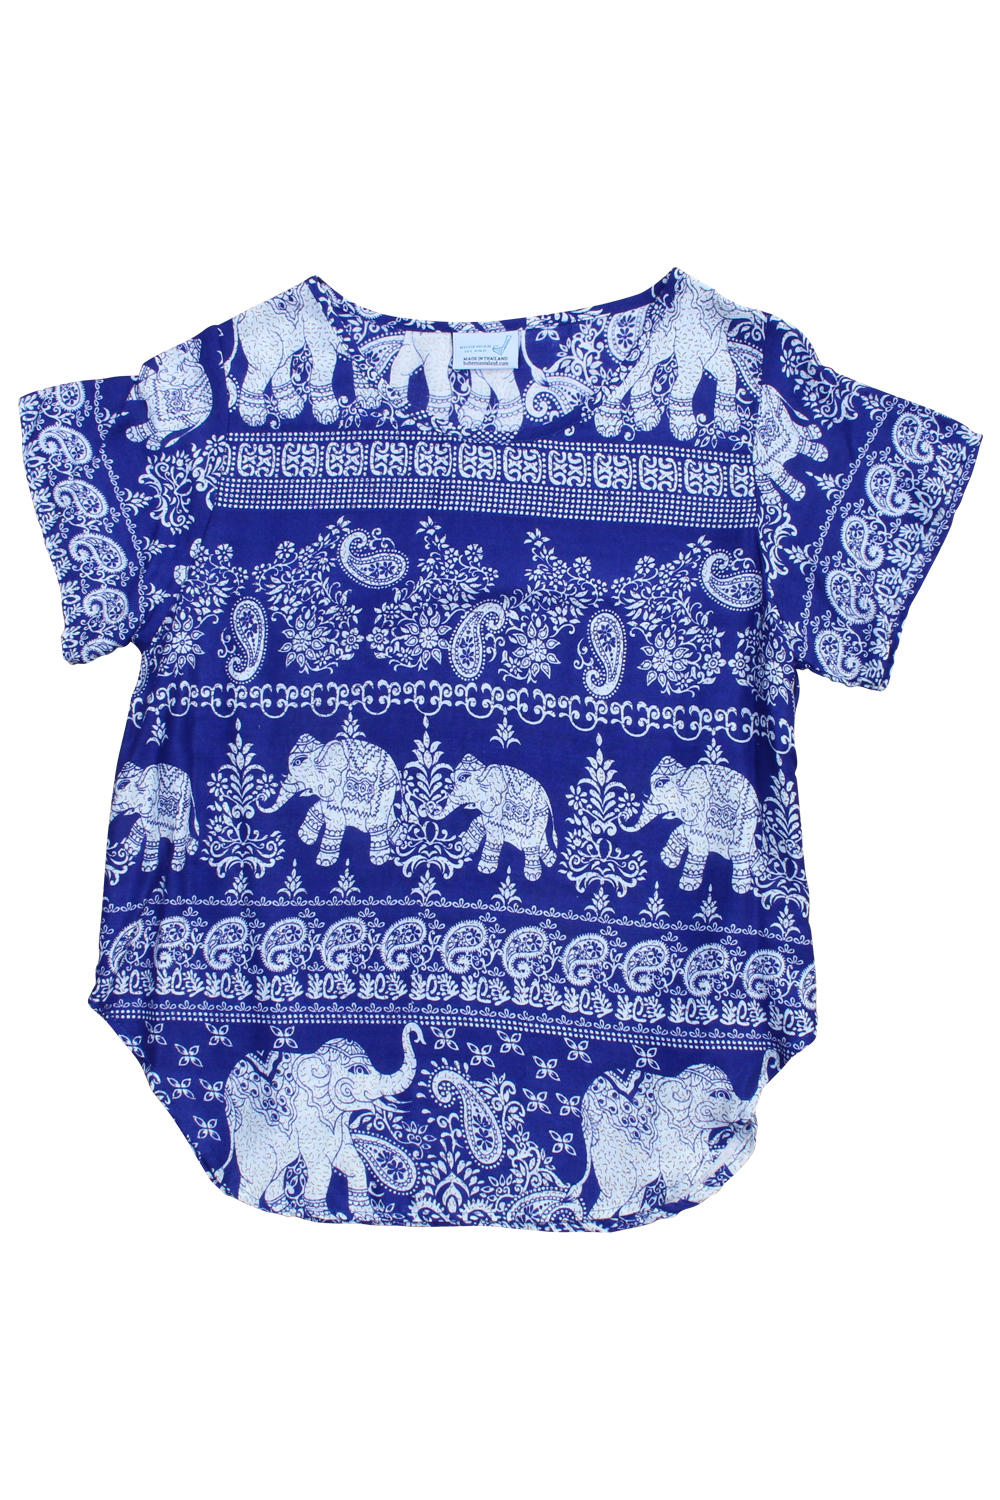 vanida elephant womens cotton shirt bohemian island